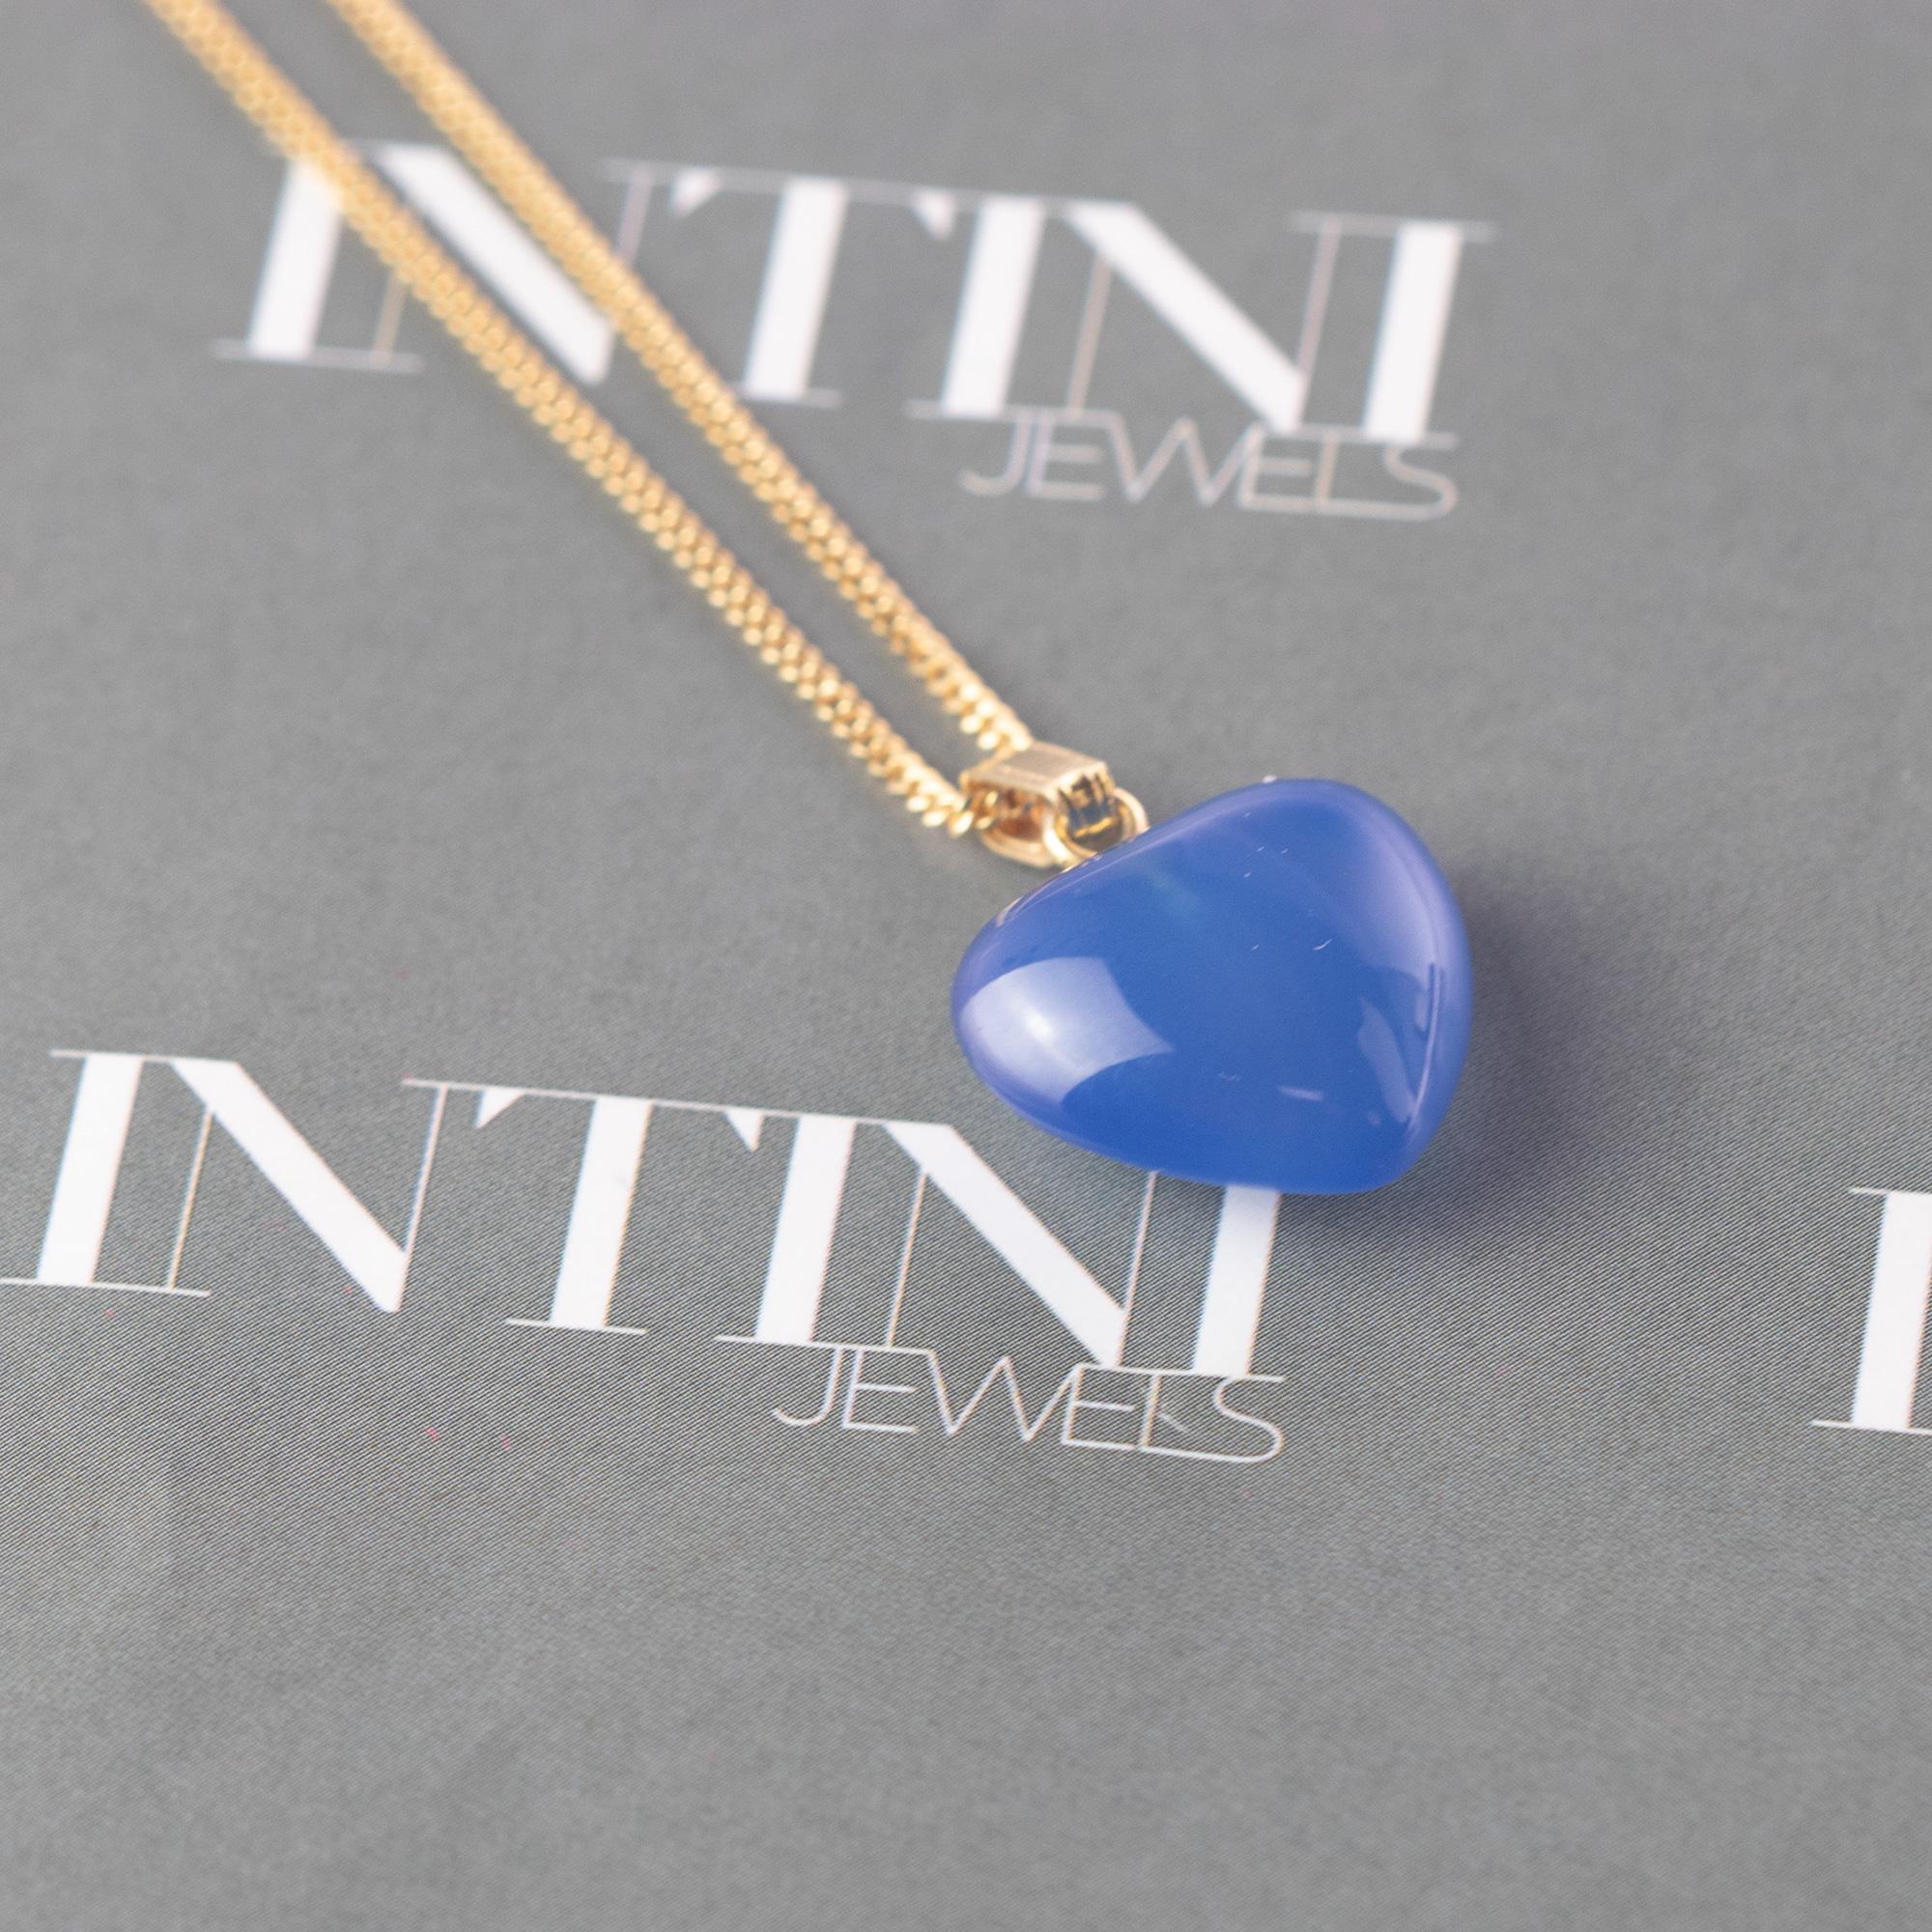 Romantic Intini Jewels Natural Quartz Heart Pendant 9 Karat Gold Chain Love Necklace For Sale